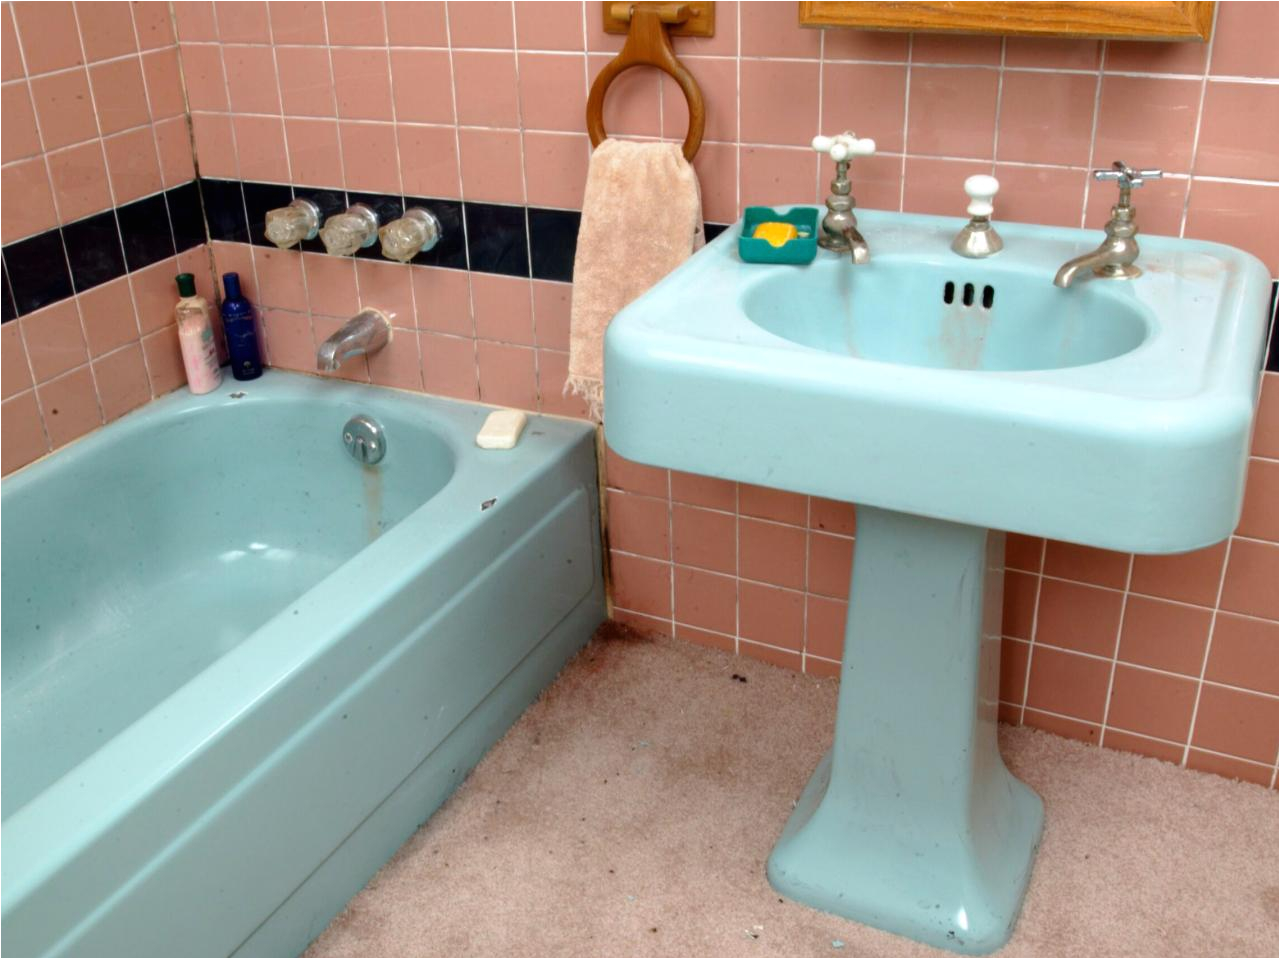 1950s bathroom tiles designs